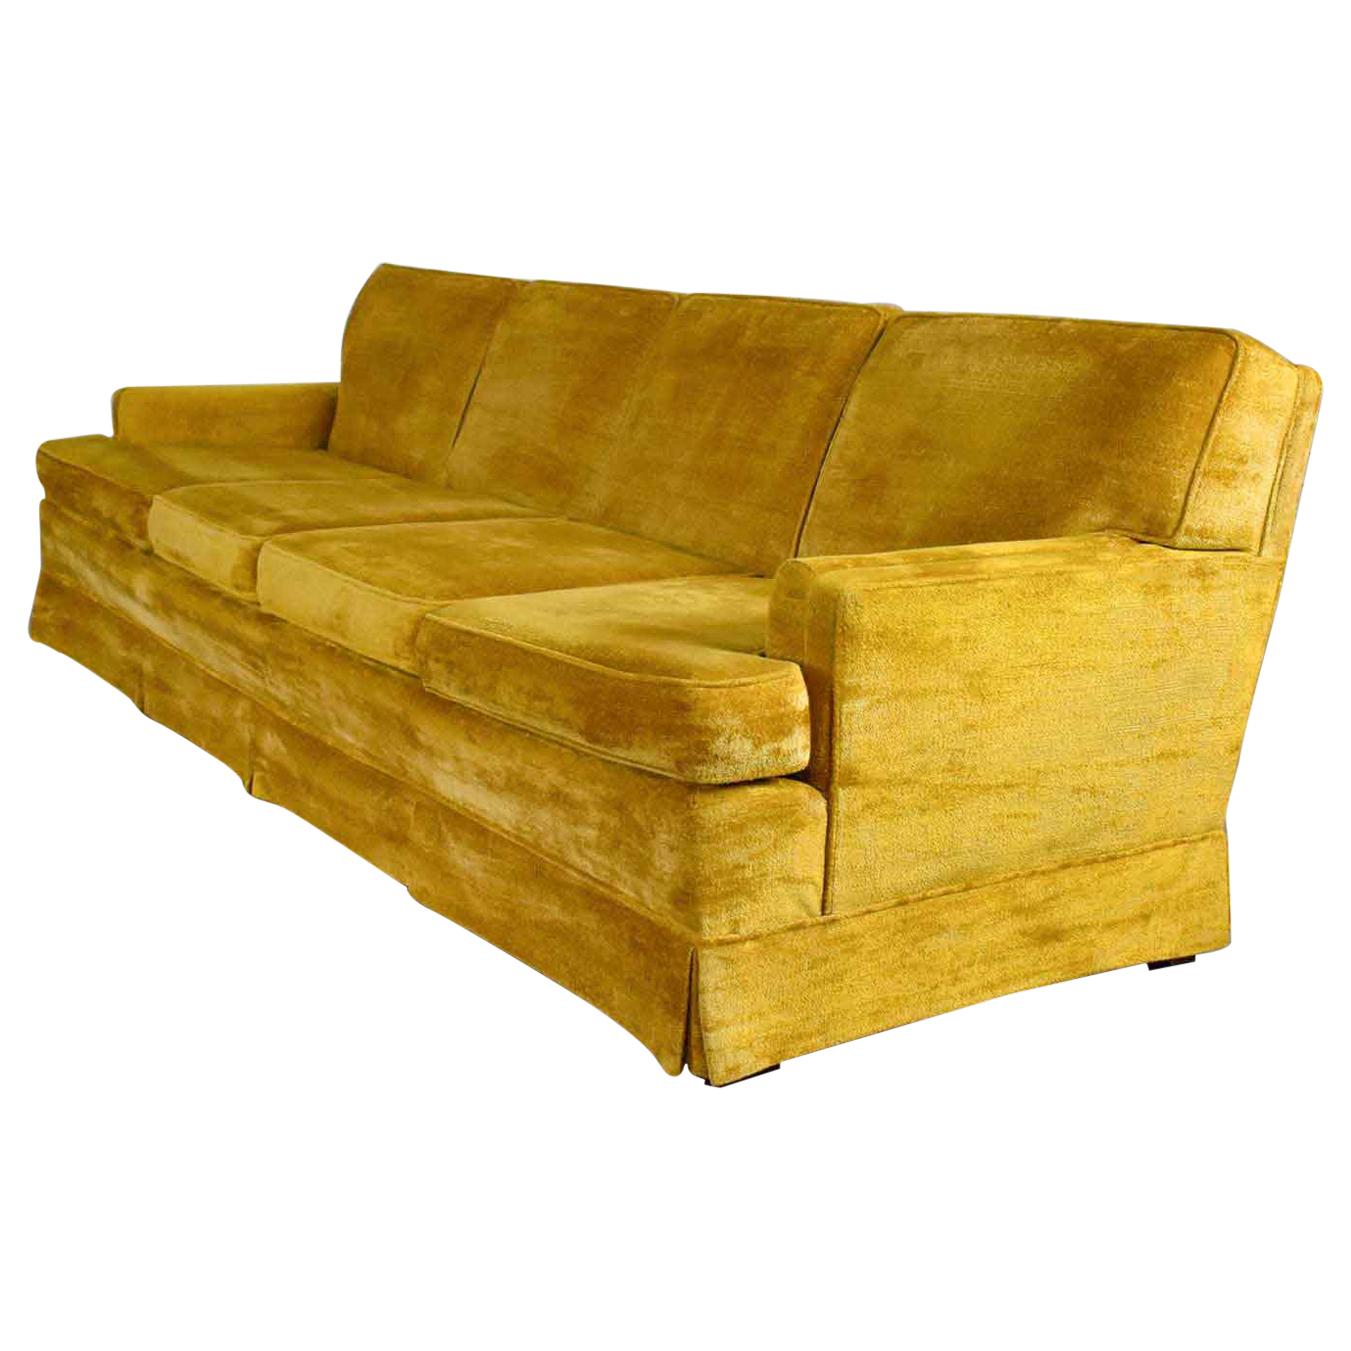 MCM Lawson Style 4 Cushion Gold Velvet Sofa Park Slope Coll. Abraham & Straus